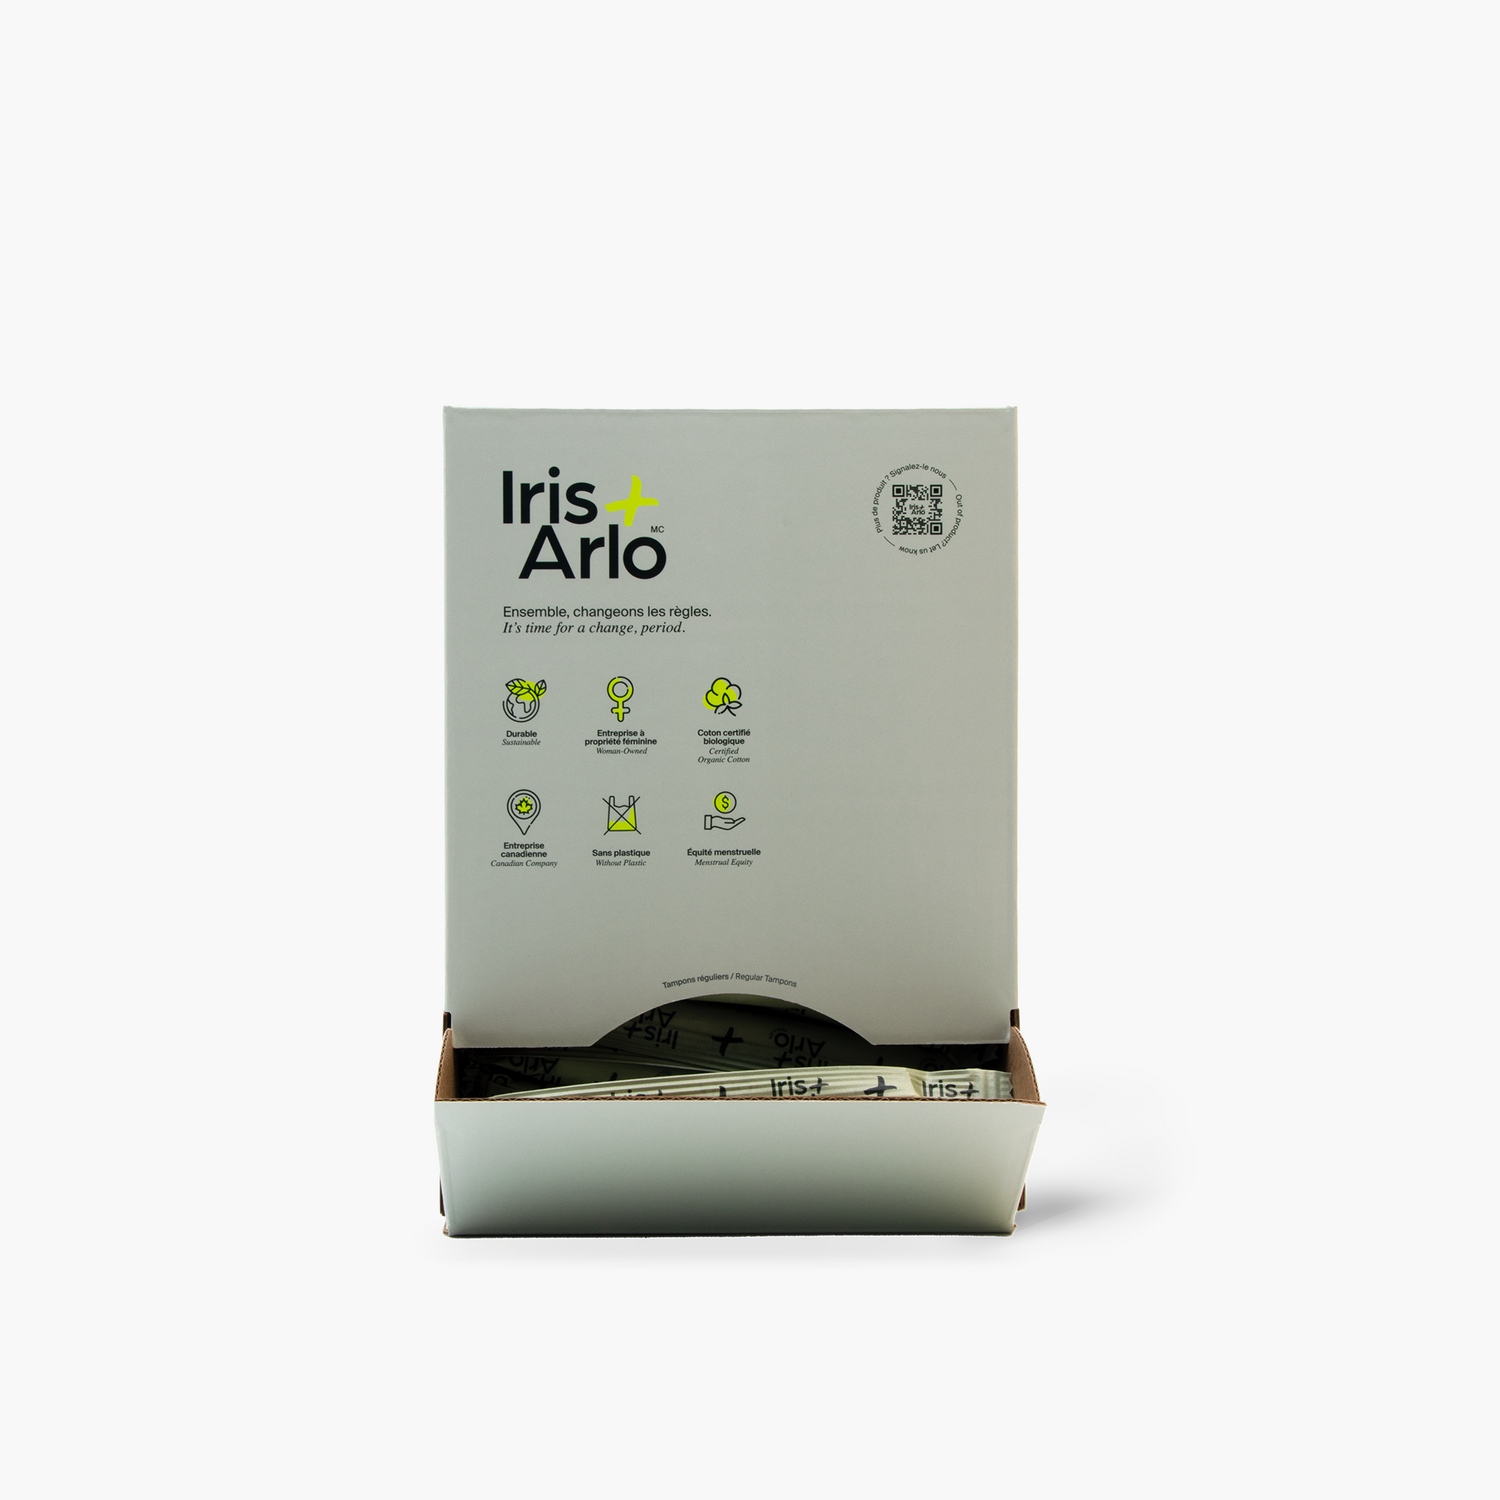 Iris + Arlo Wall-mounted Cardboard Dispenser, Organic and Sustainable Tampons